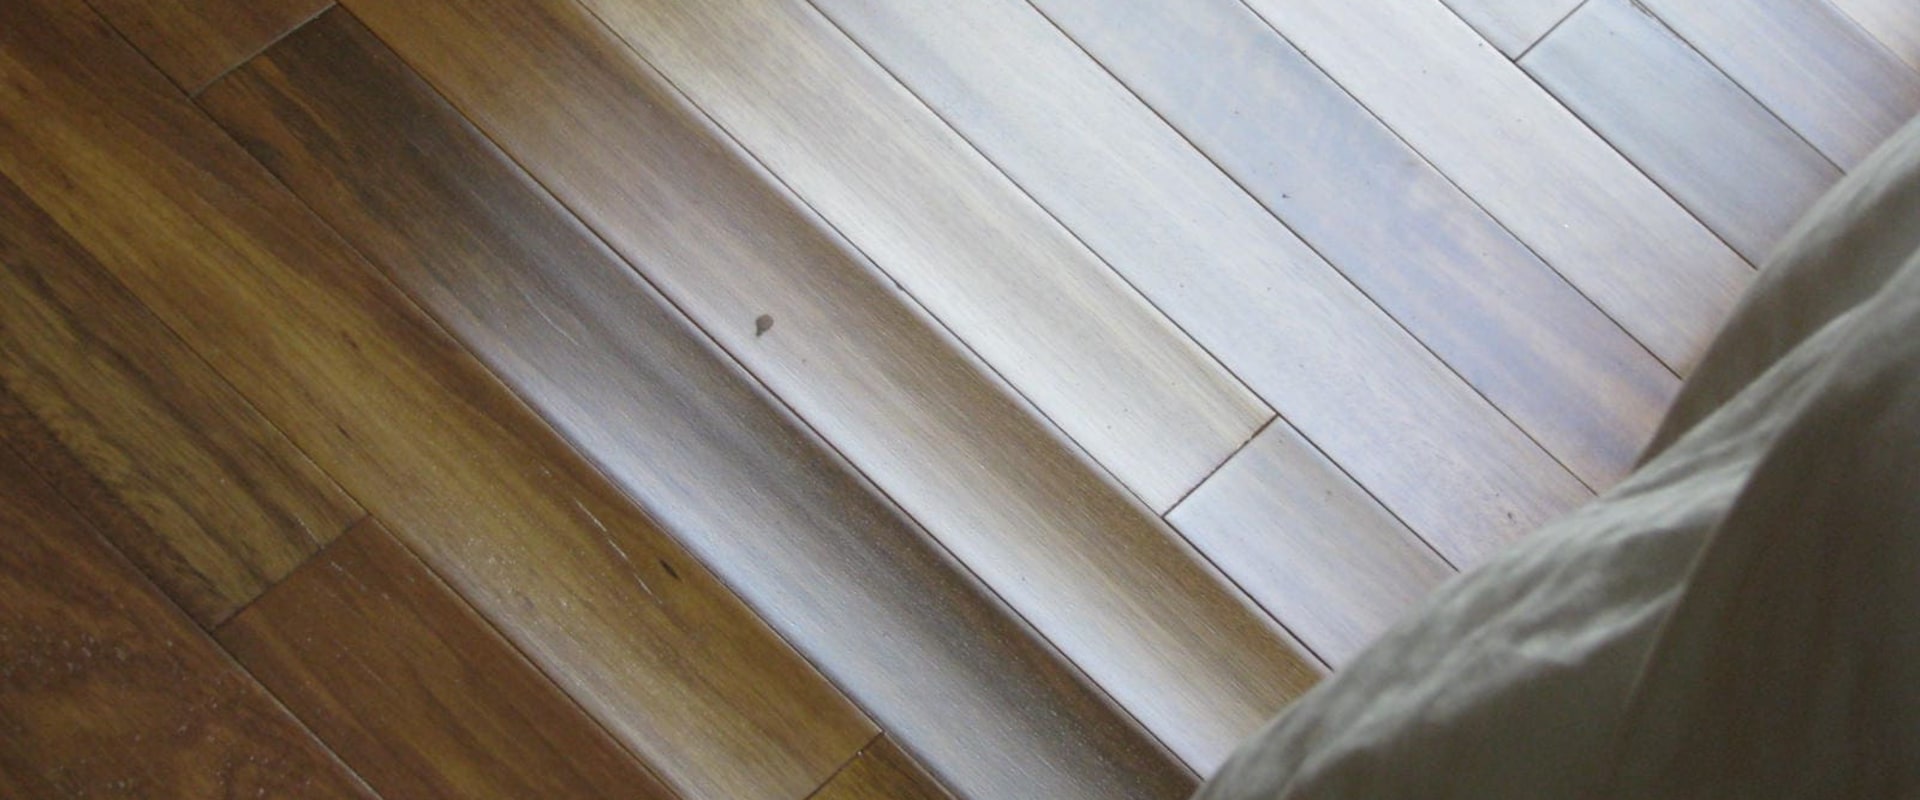 What will ruin hardwood floors?